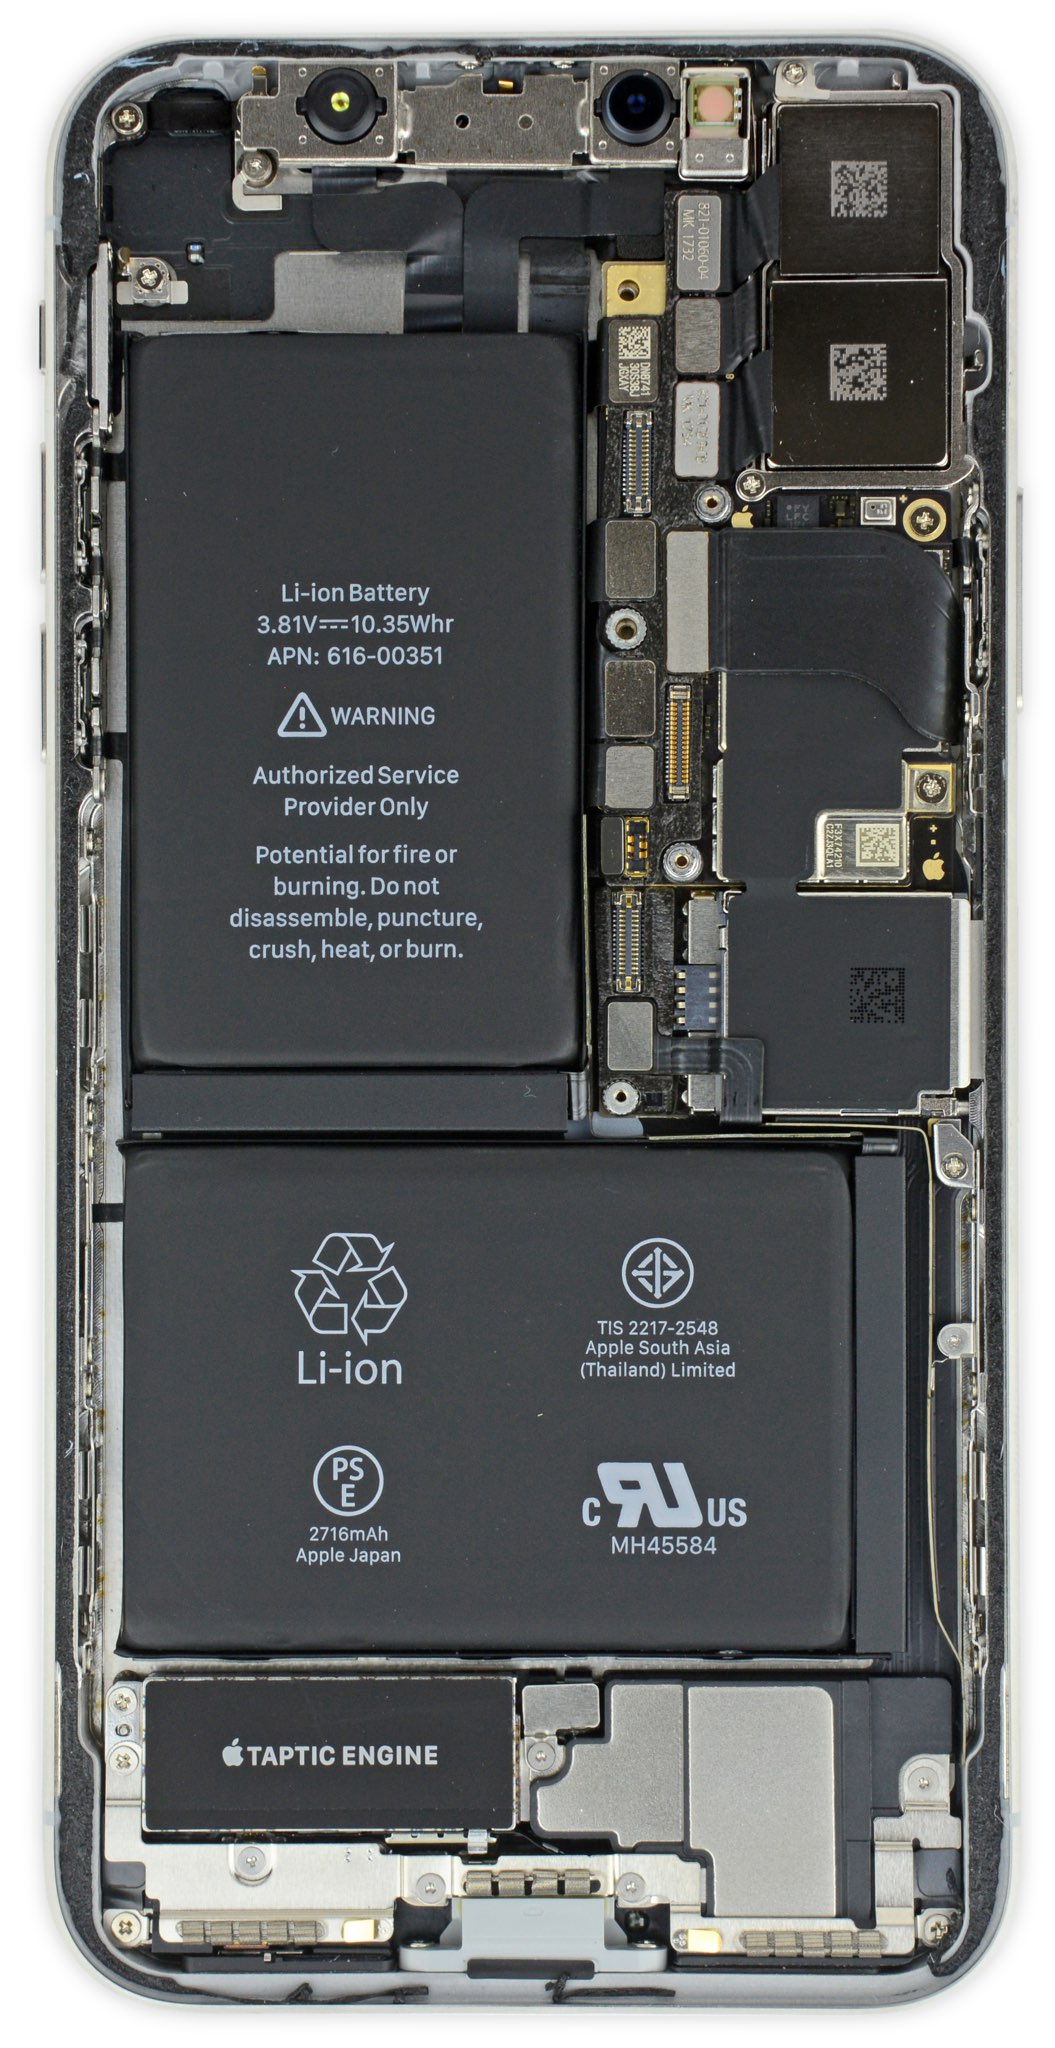 iPhone X teardown: 3GB RAM, two-cell 2